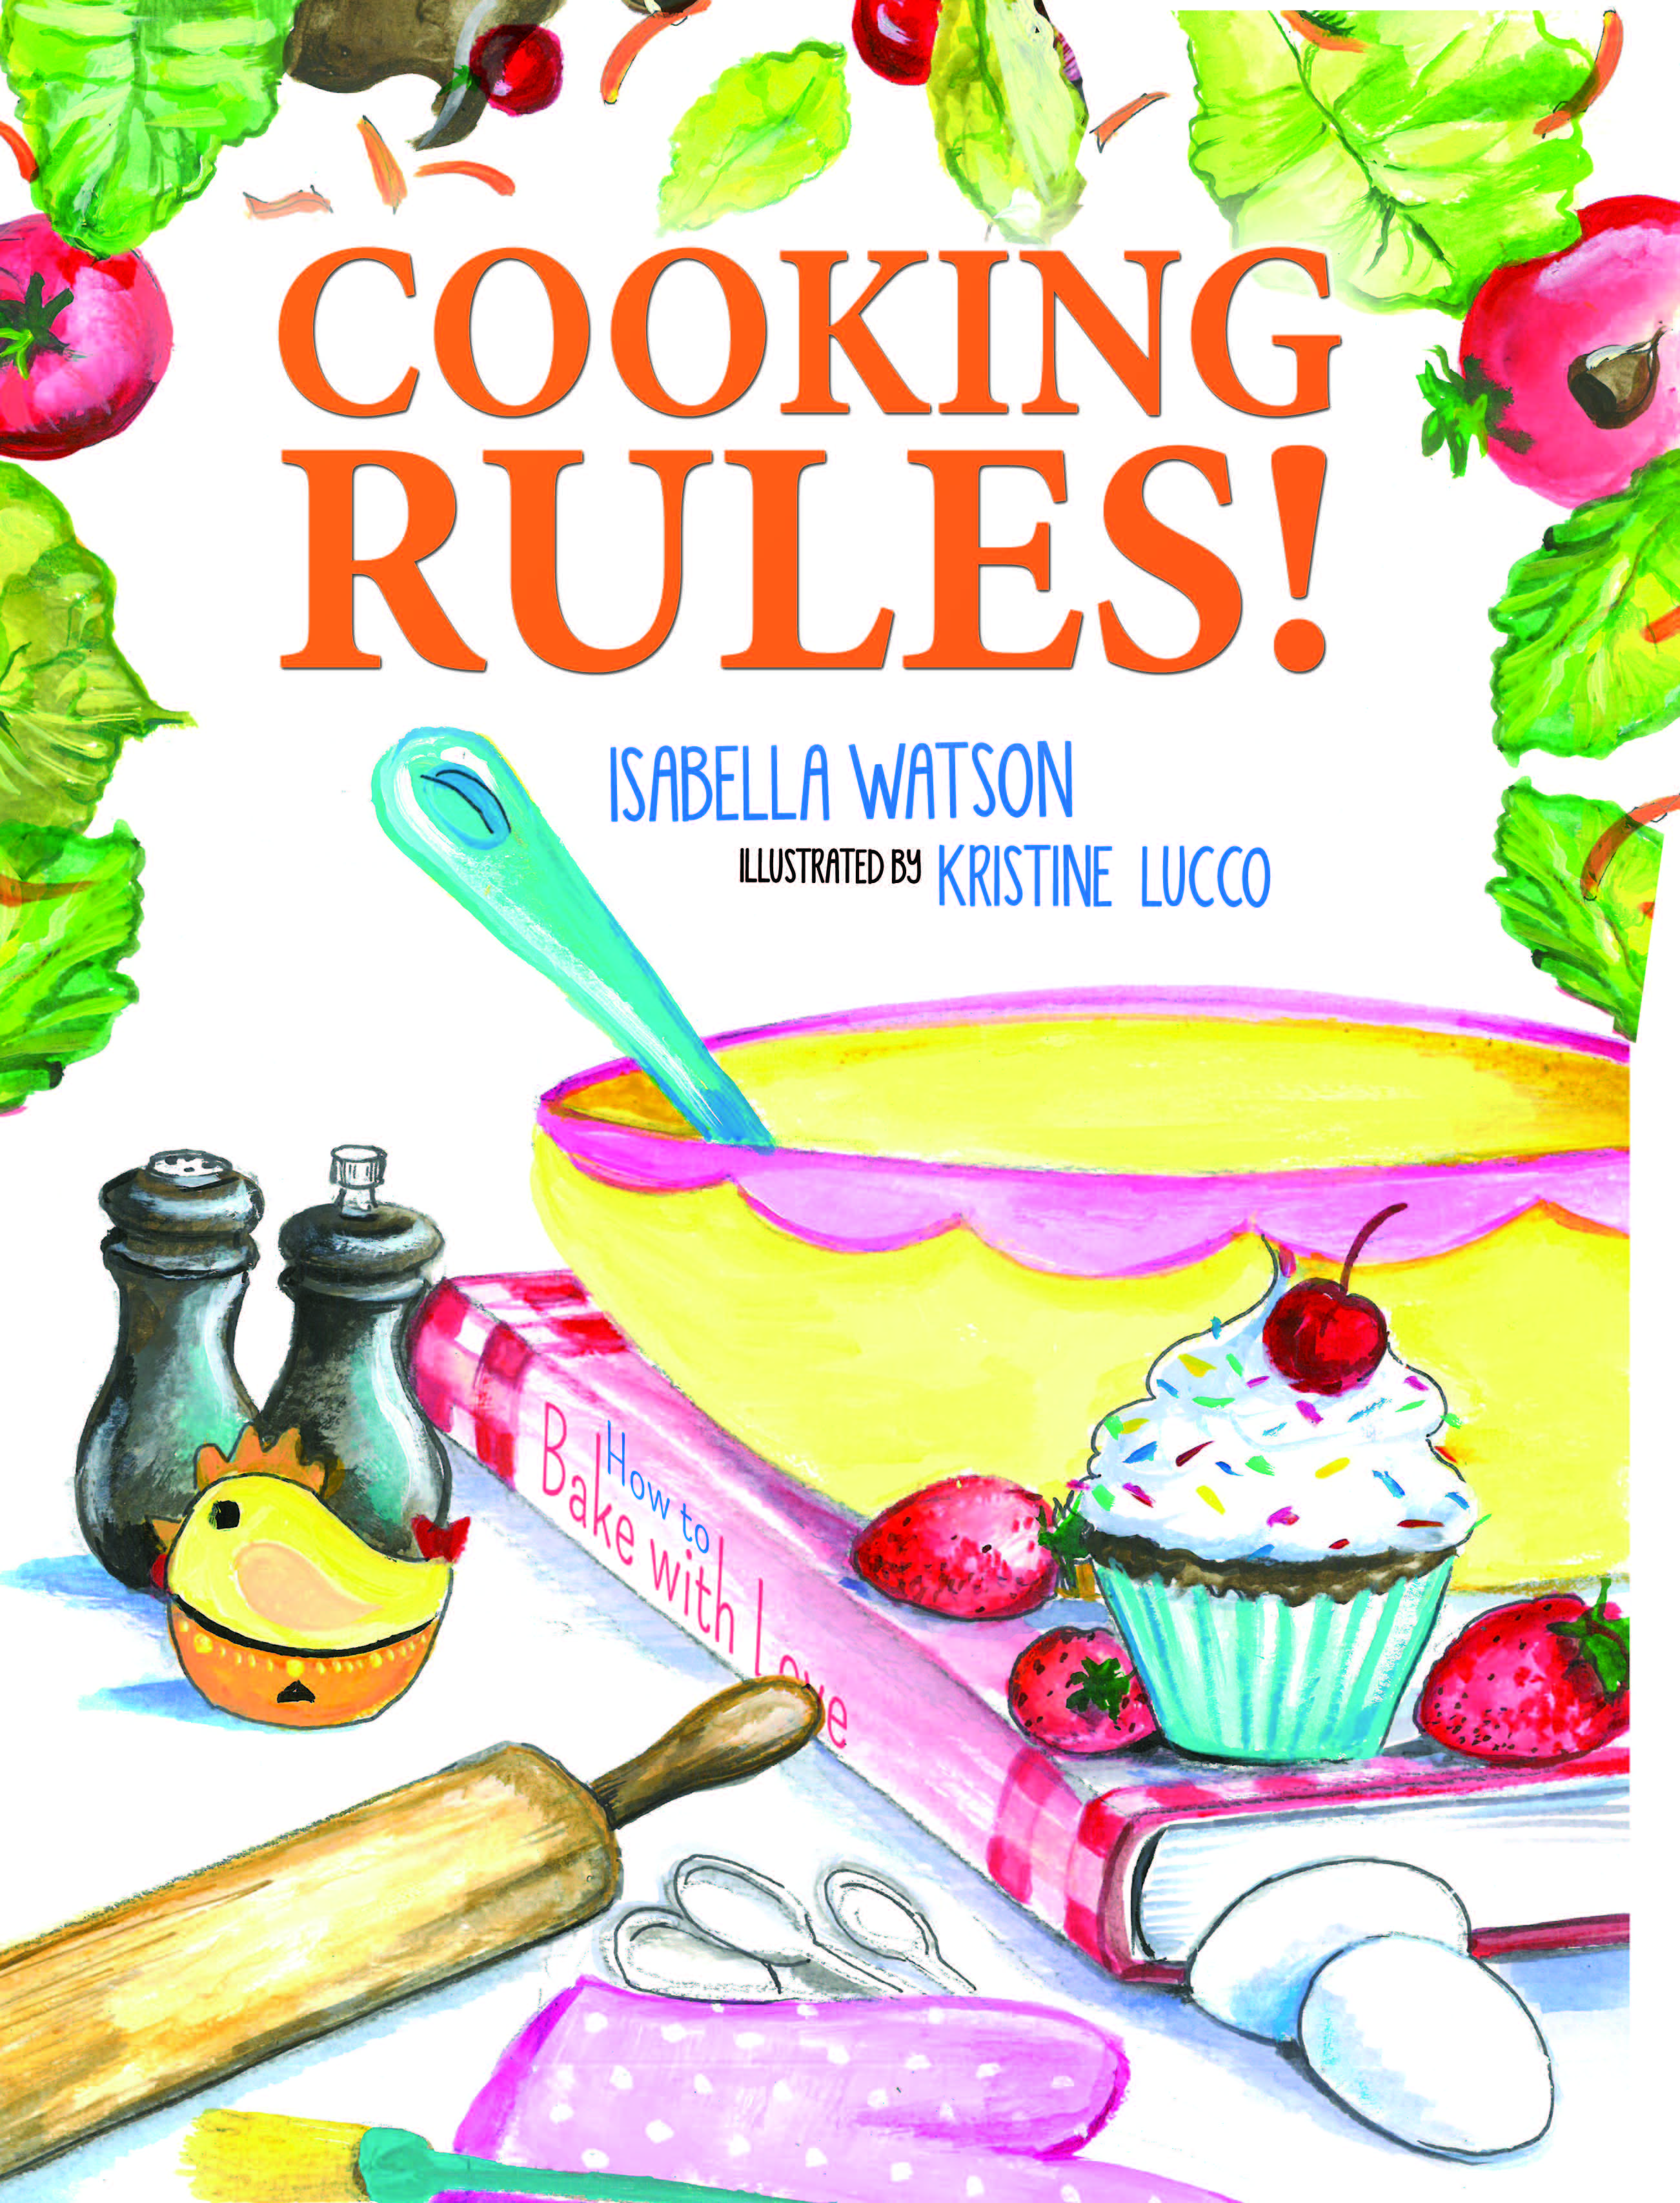 Cooking Rules! Isabella Watson